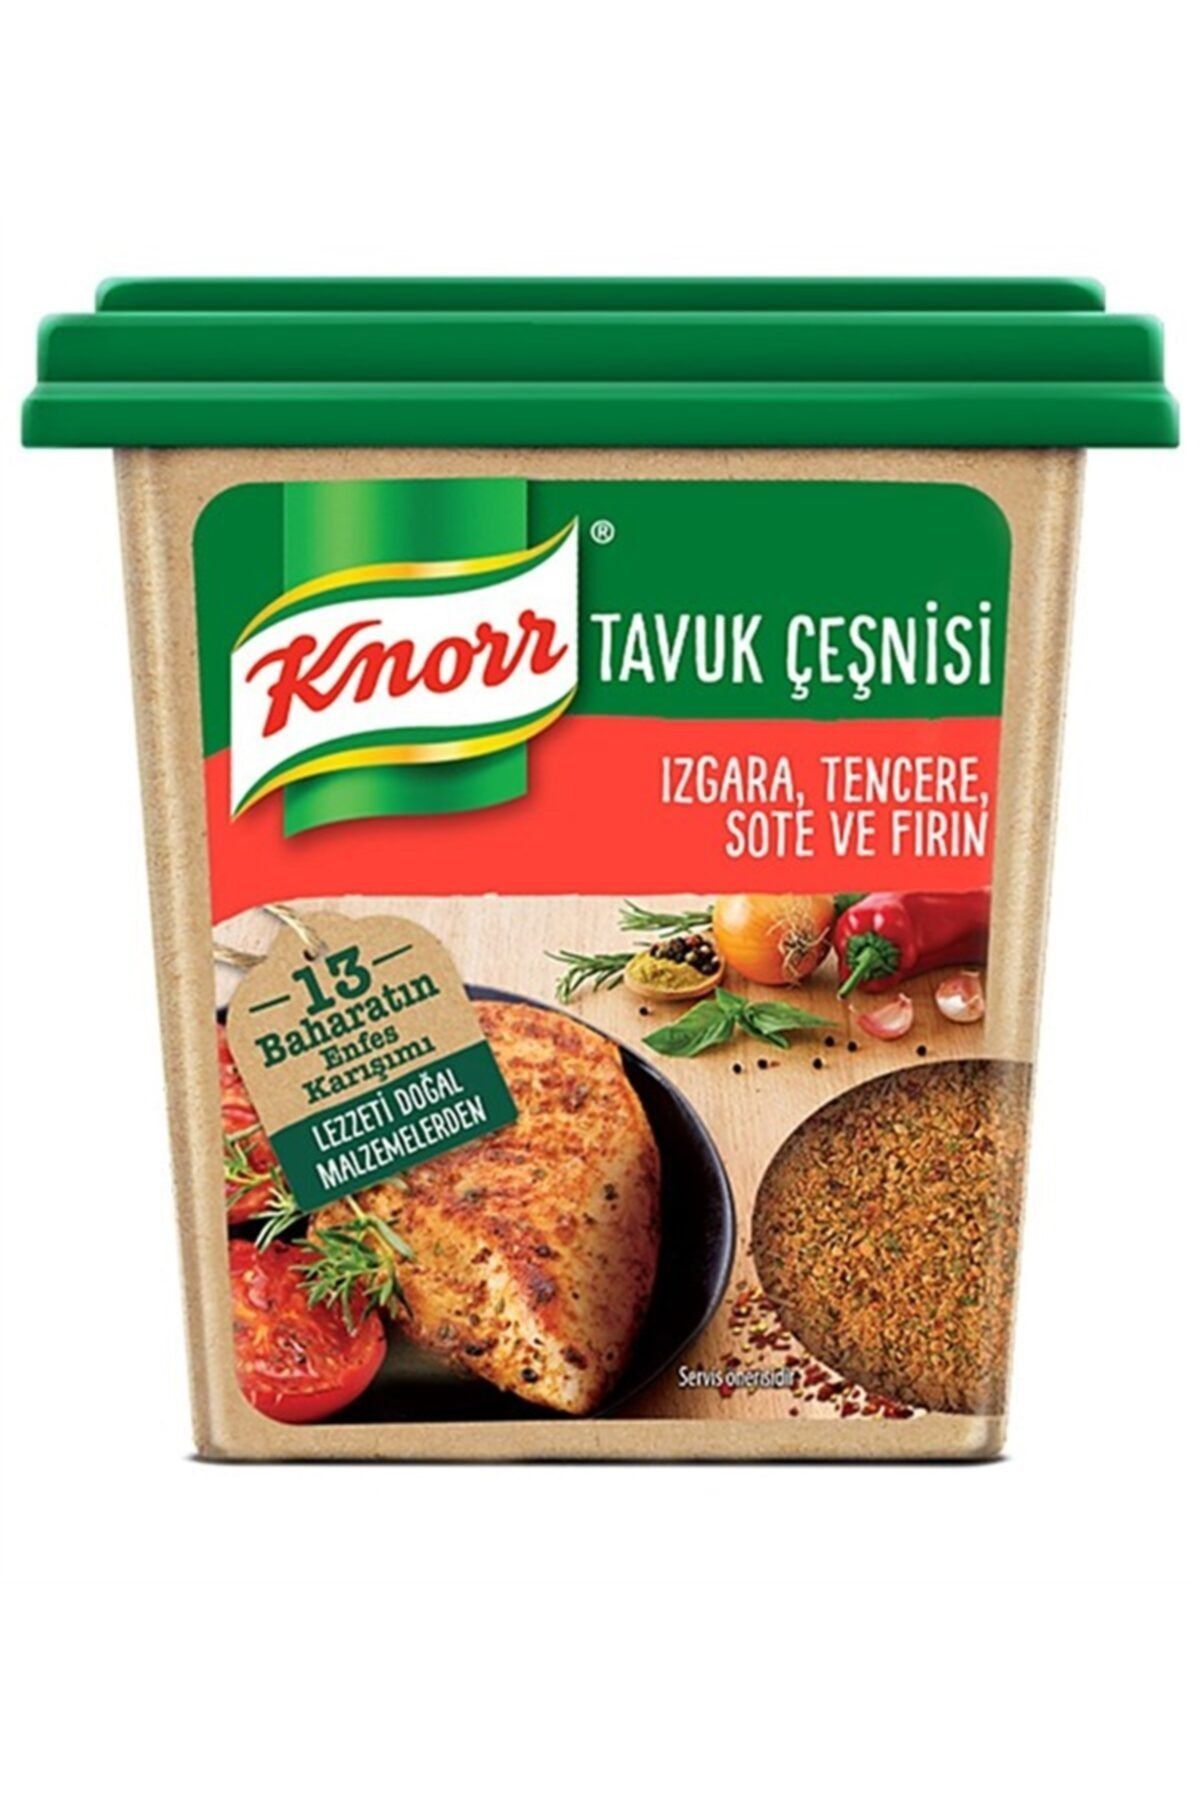 Knorr Tavuk Çeşnisi 130 gr. Yirmidörtlü Set